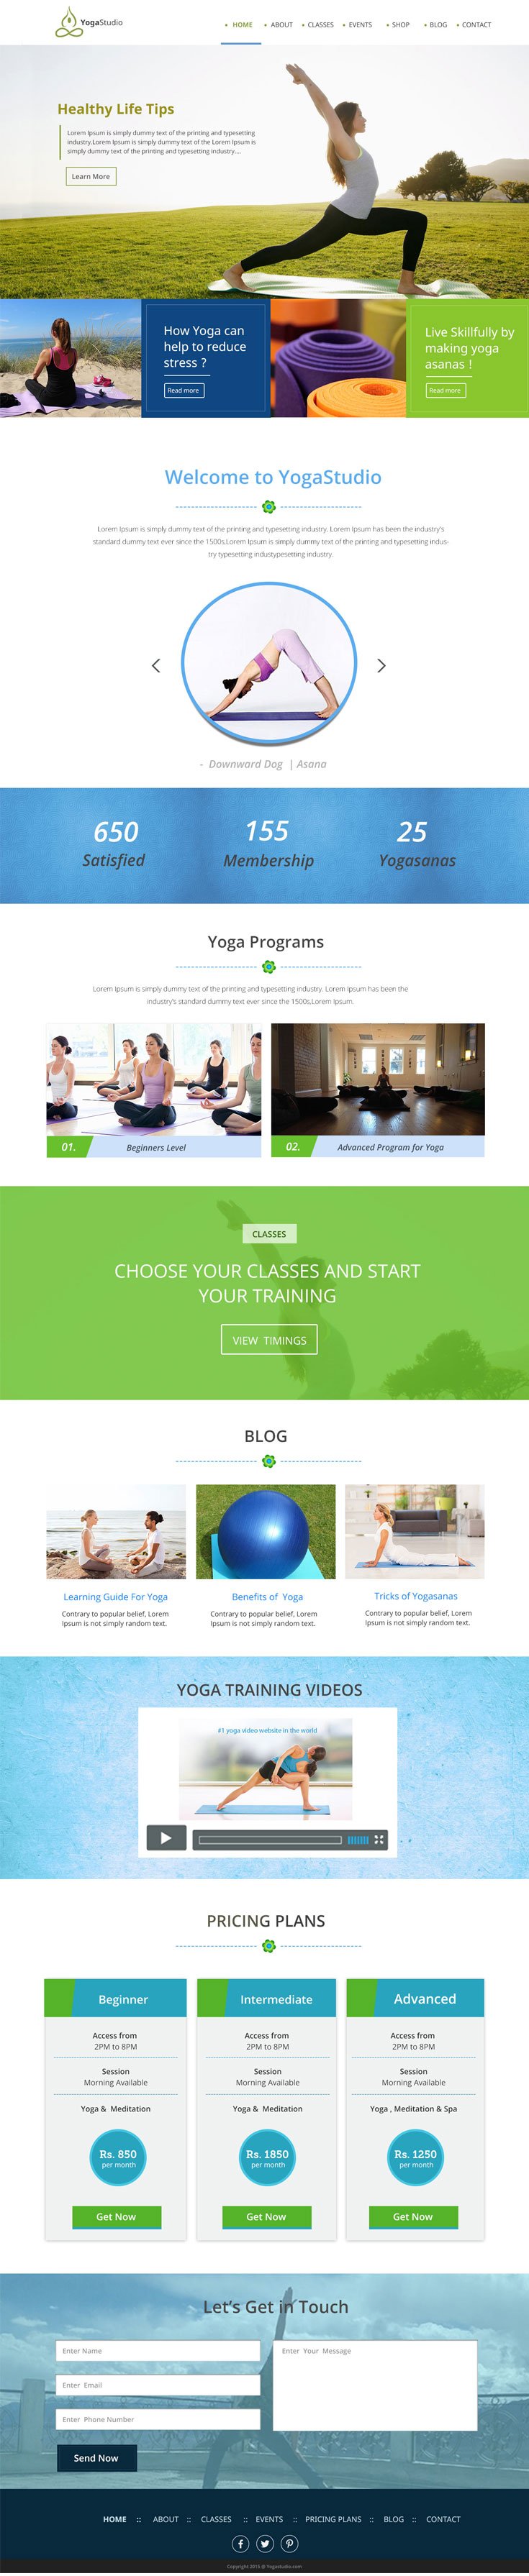 Free Yoga Studio PSD Template